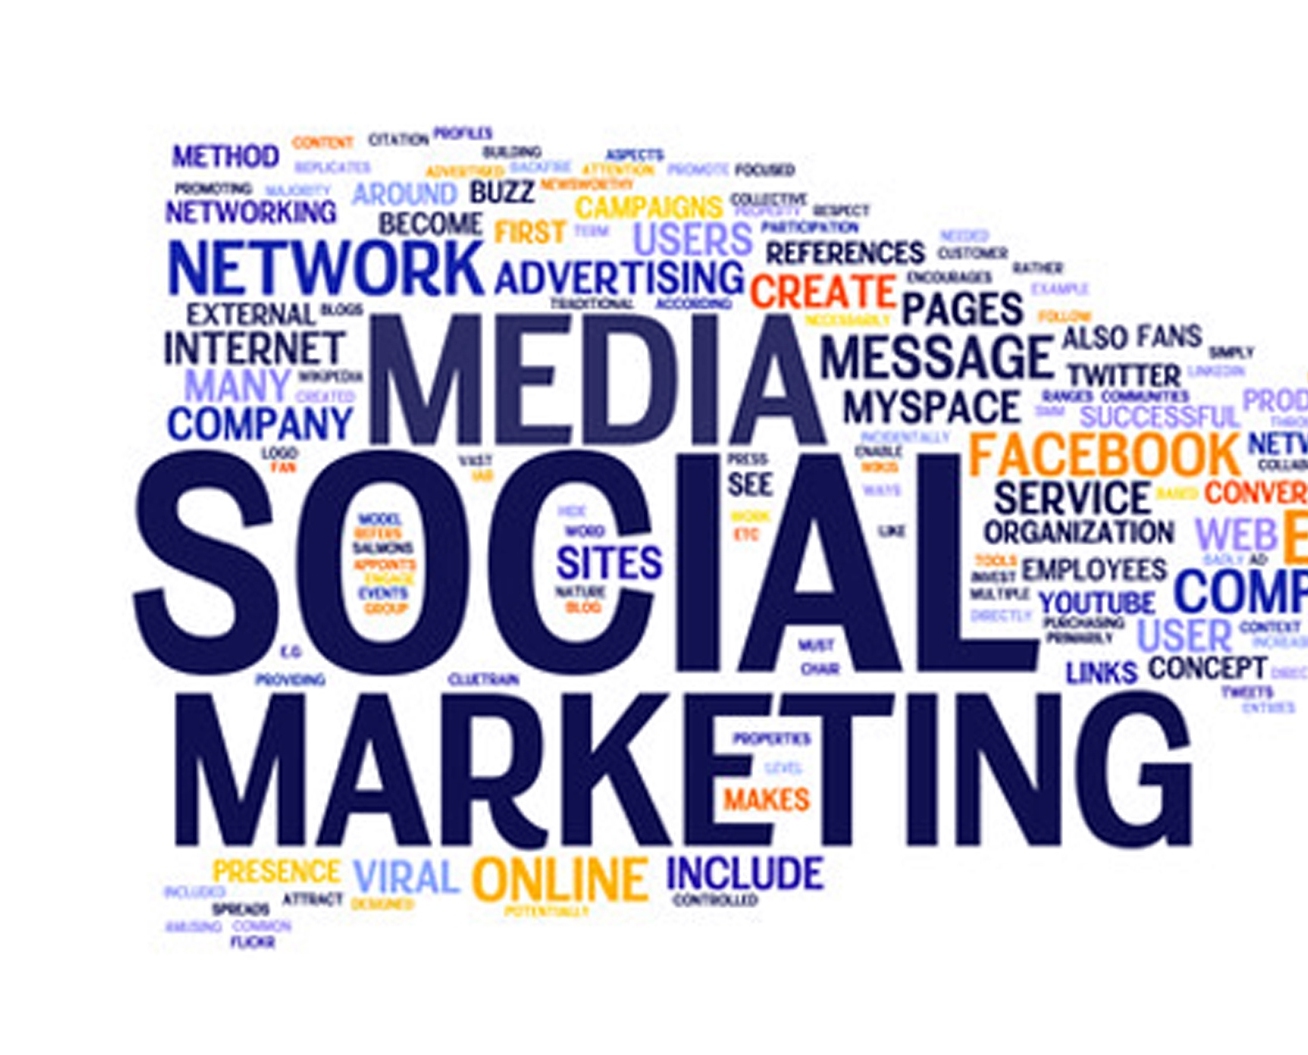 SEO Tips For Social Media Marketing